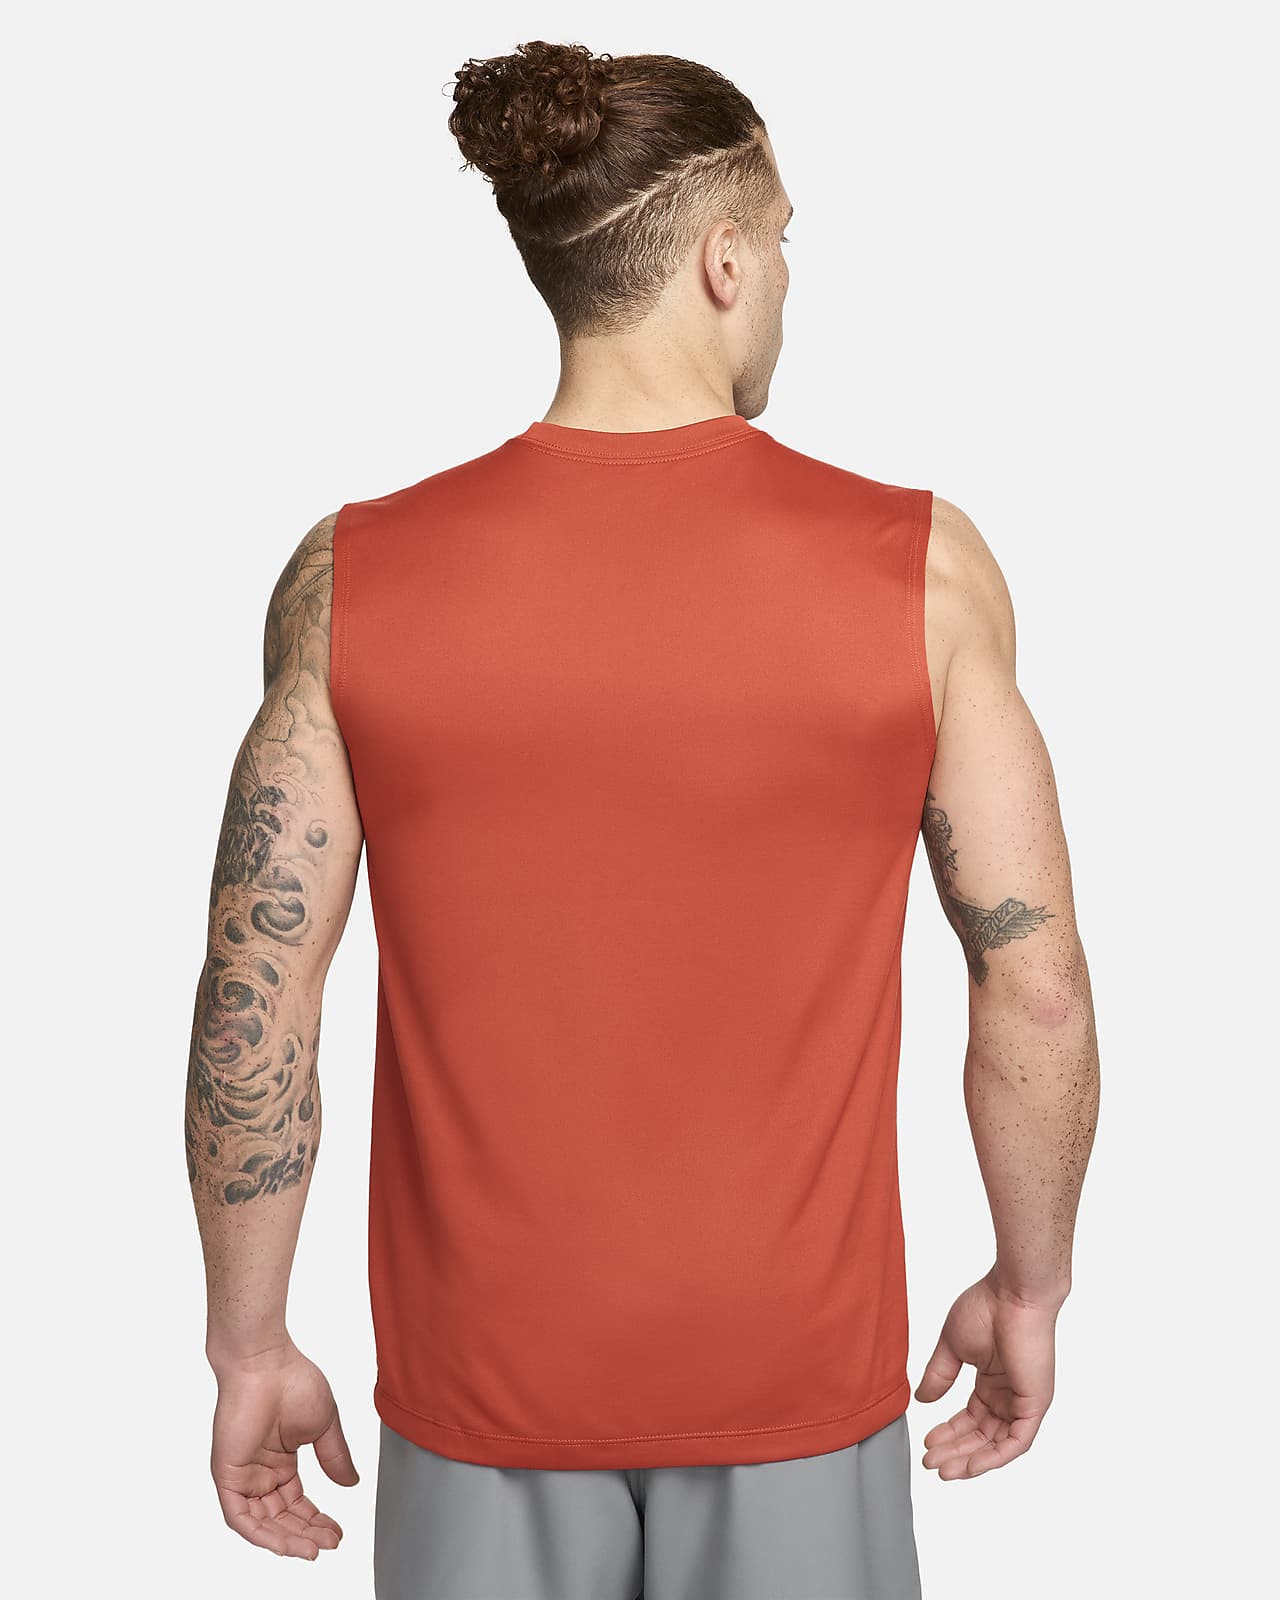 Men's Sleeveless Gym T-Shirts & Tops